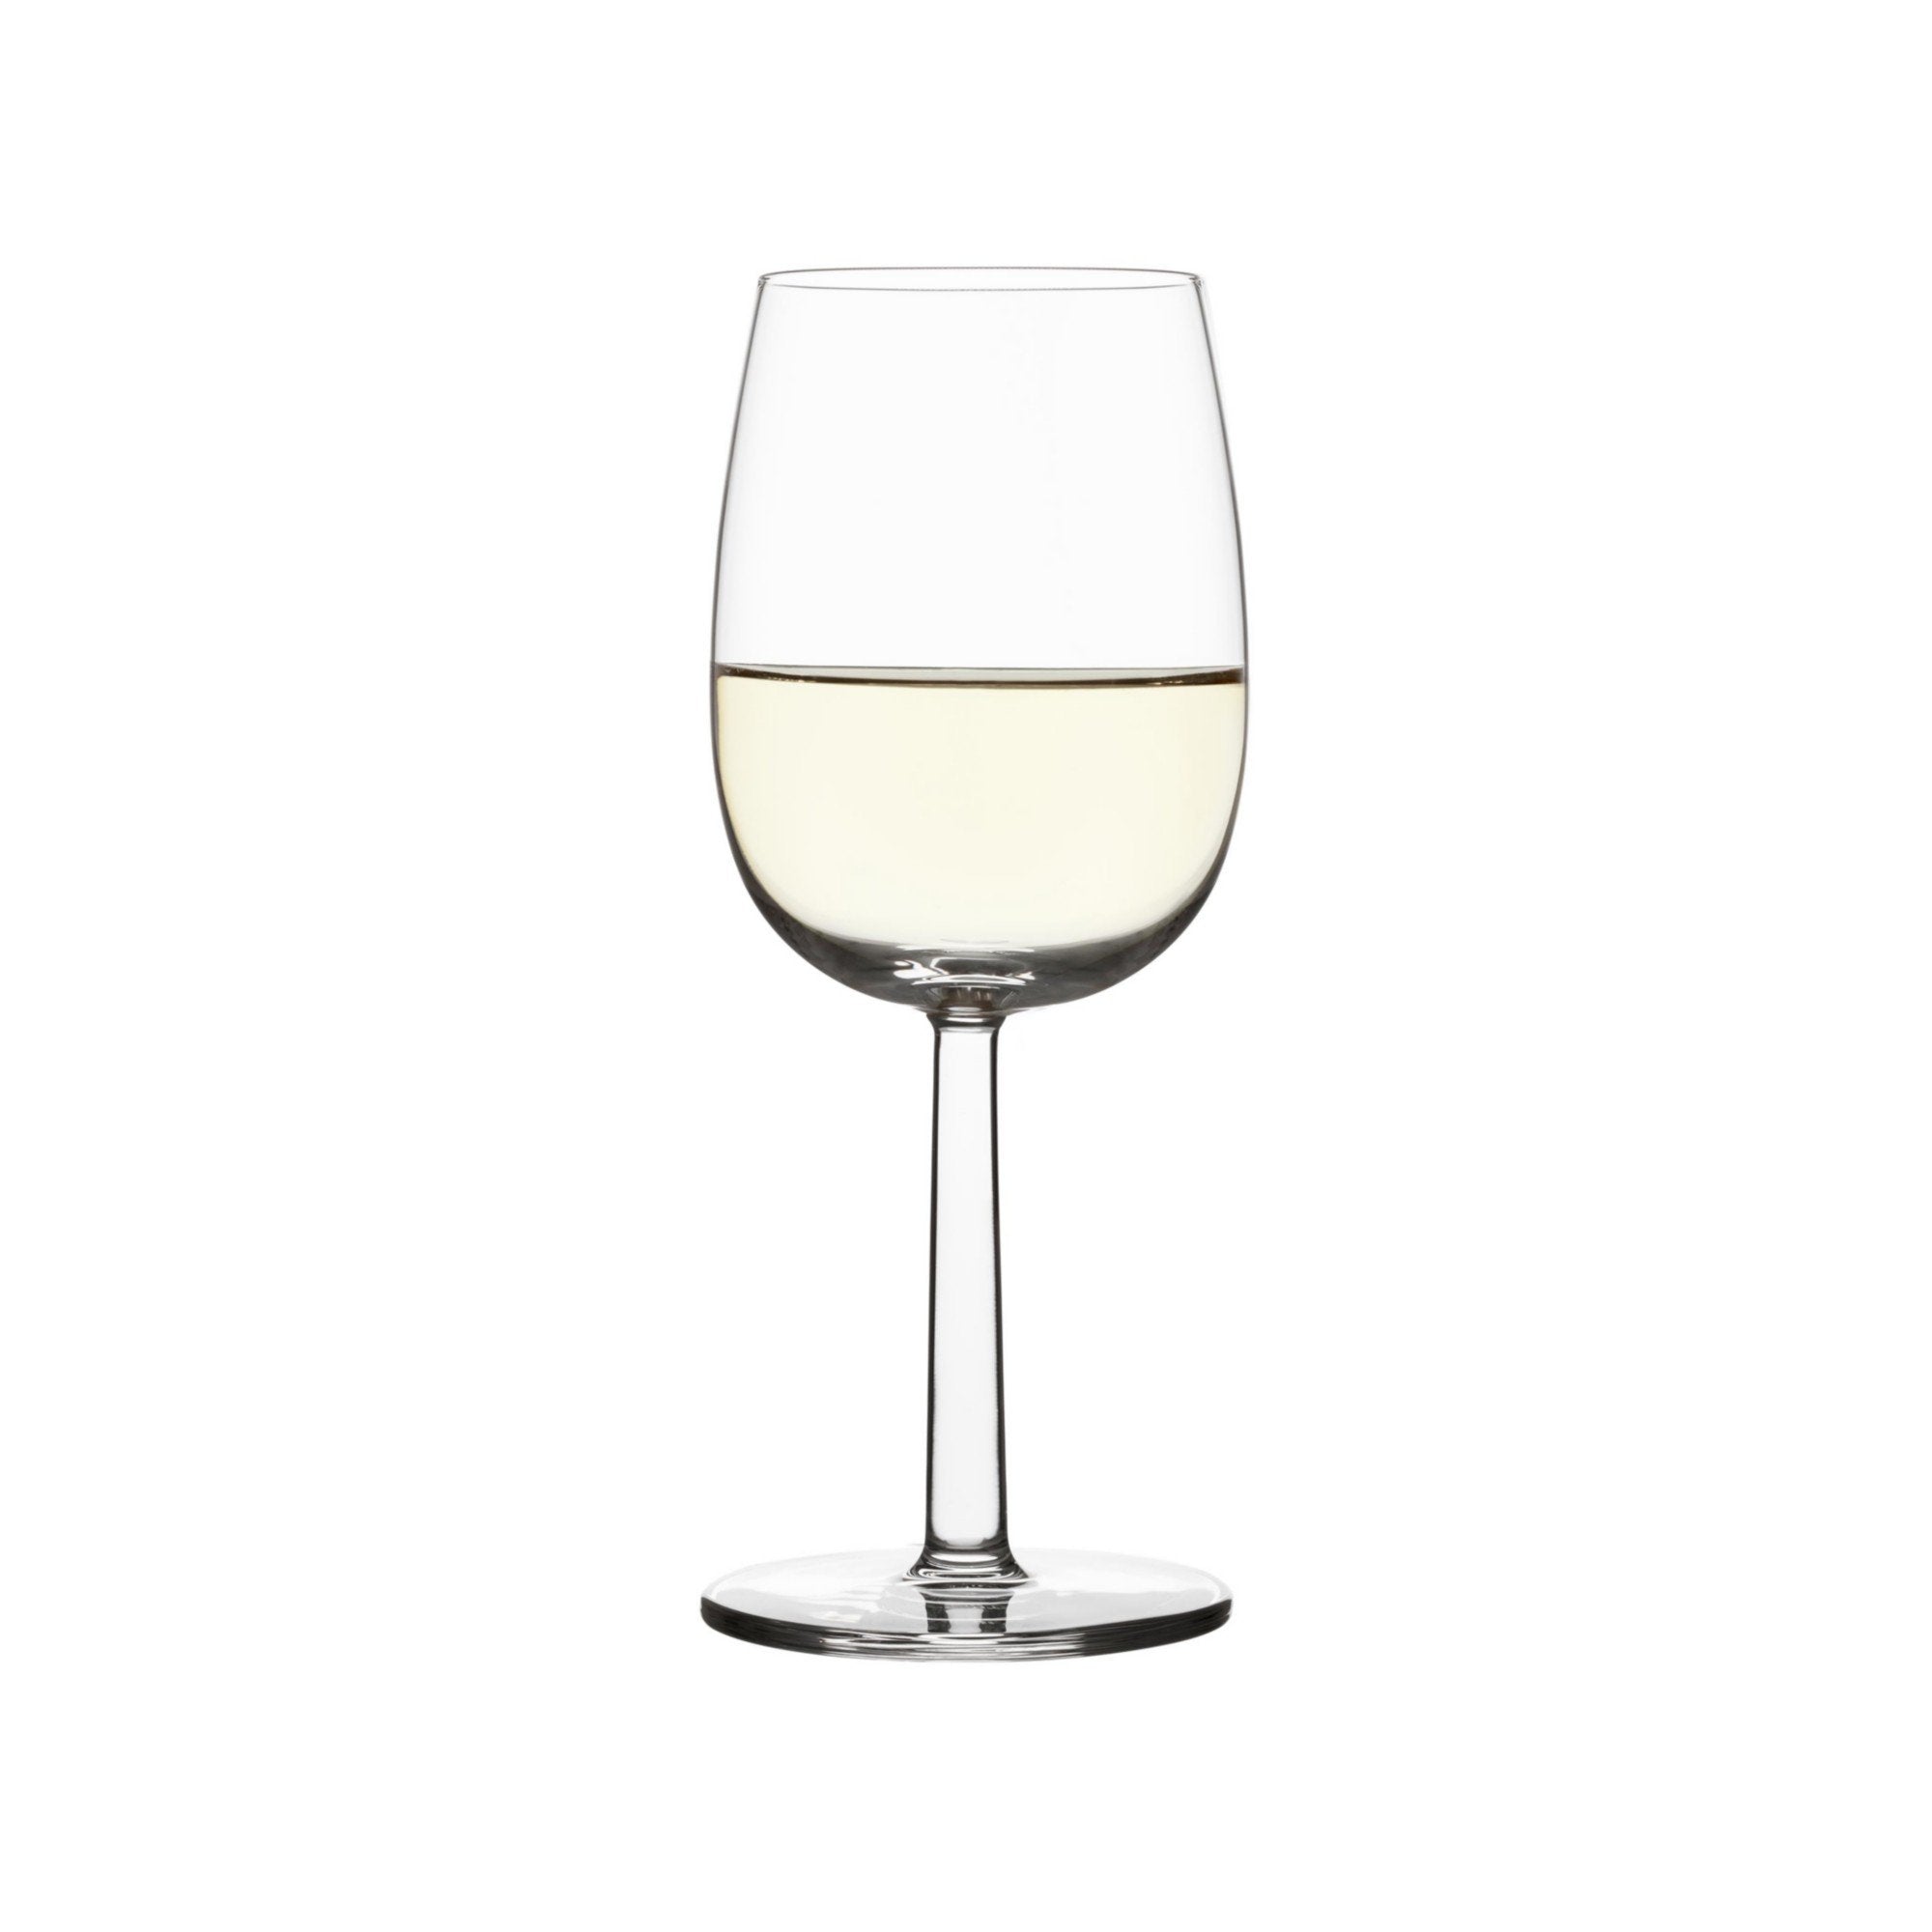 Iittala Verres à vin blanc raami clairs 2pcs, 28cl